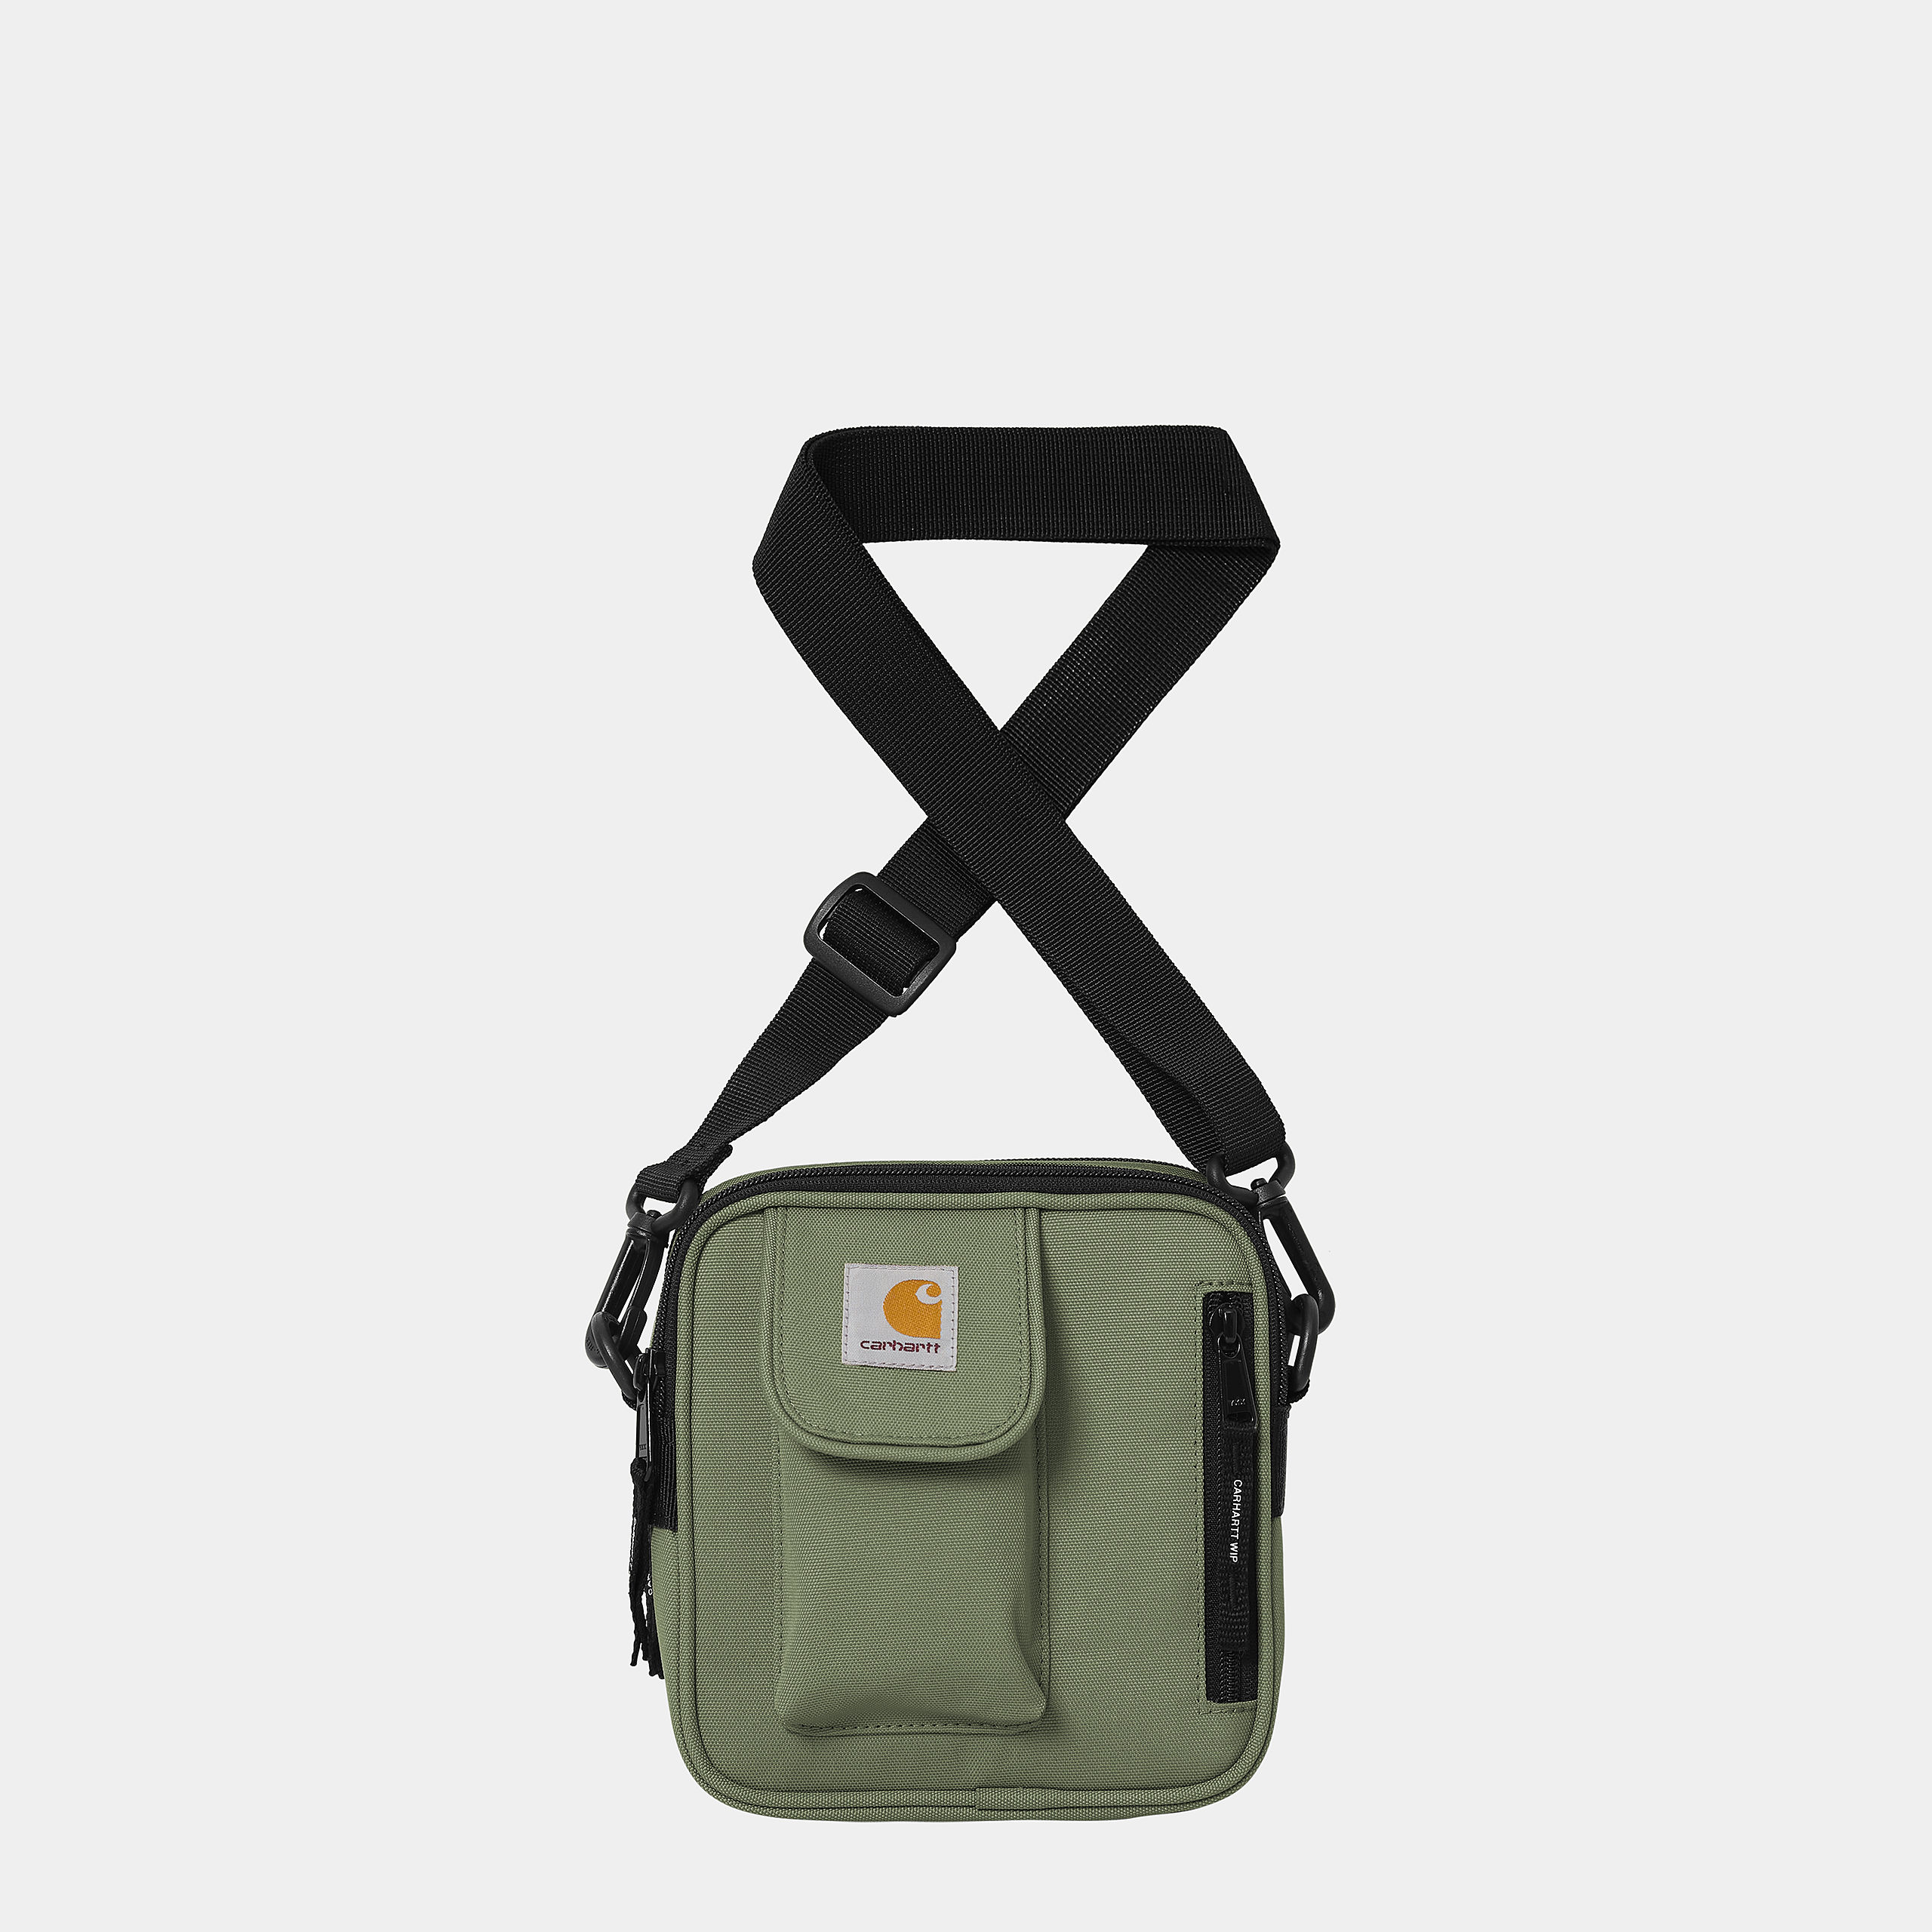 Carhartt сумка через плечо. Сумка Carhartt WIP Essentials Bag. Сумка Carhartt WIP Essentials Bag small. Сумка Carhartt WIP 'Essentials Bag' Black. Сумка через плечо Carhartt WIP Essentials Bag, small.